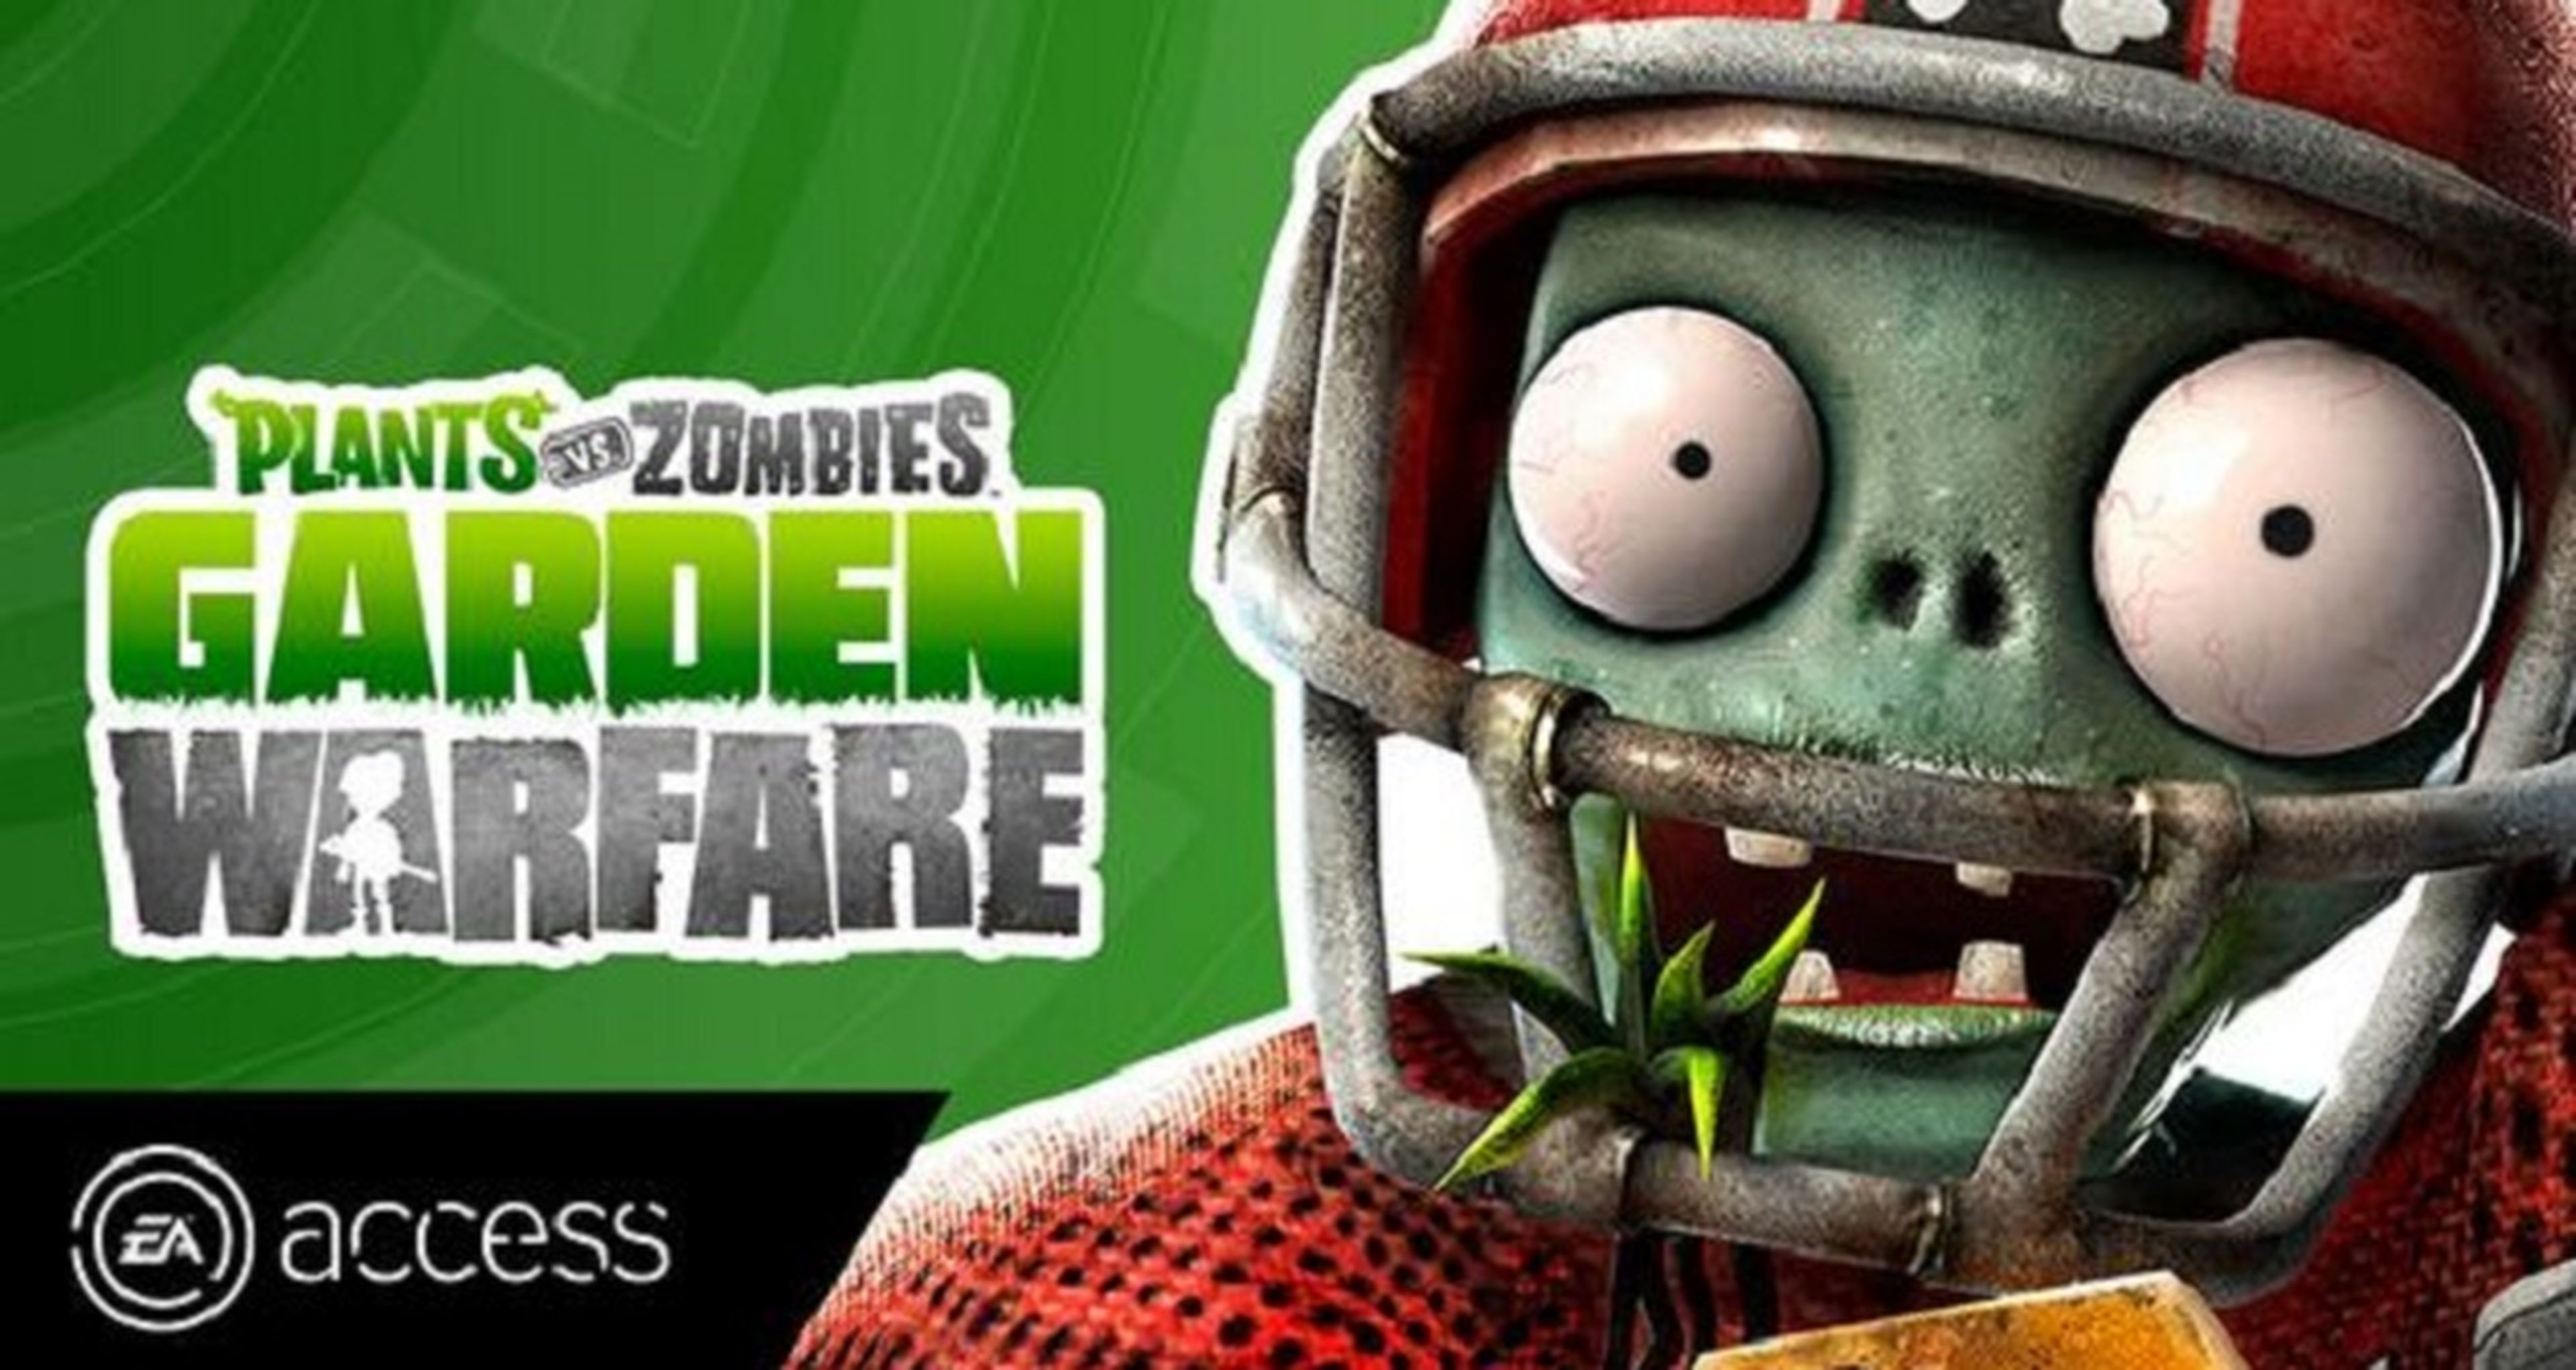 Plants vs Zombies Garden Warfare se suma a EA Access